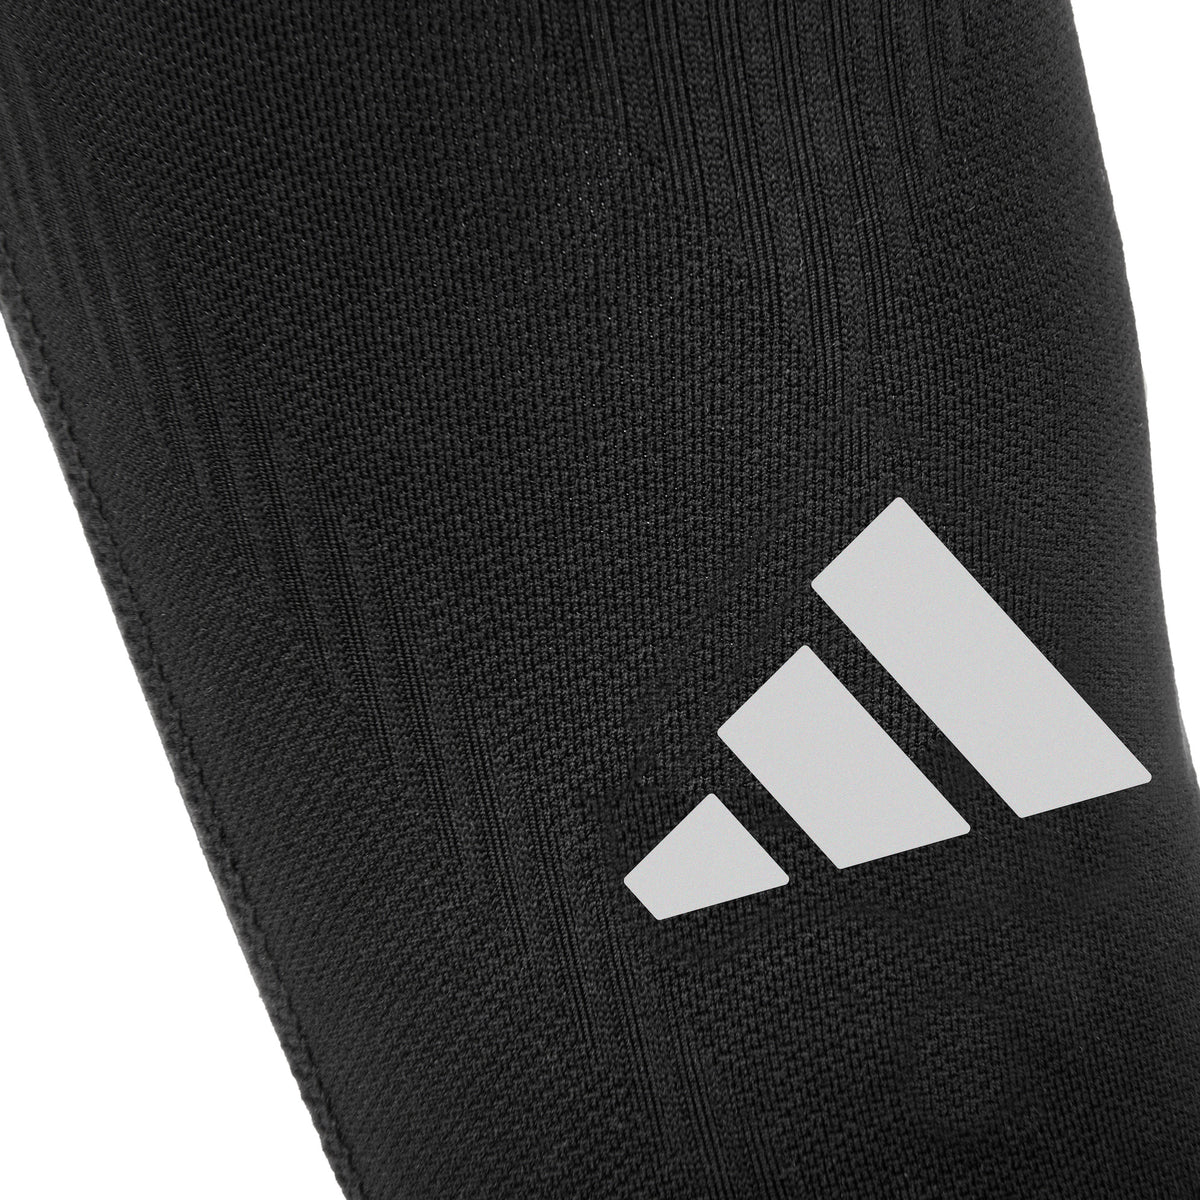 adidas Techfit Calf Sleeve Review - compression for calves